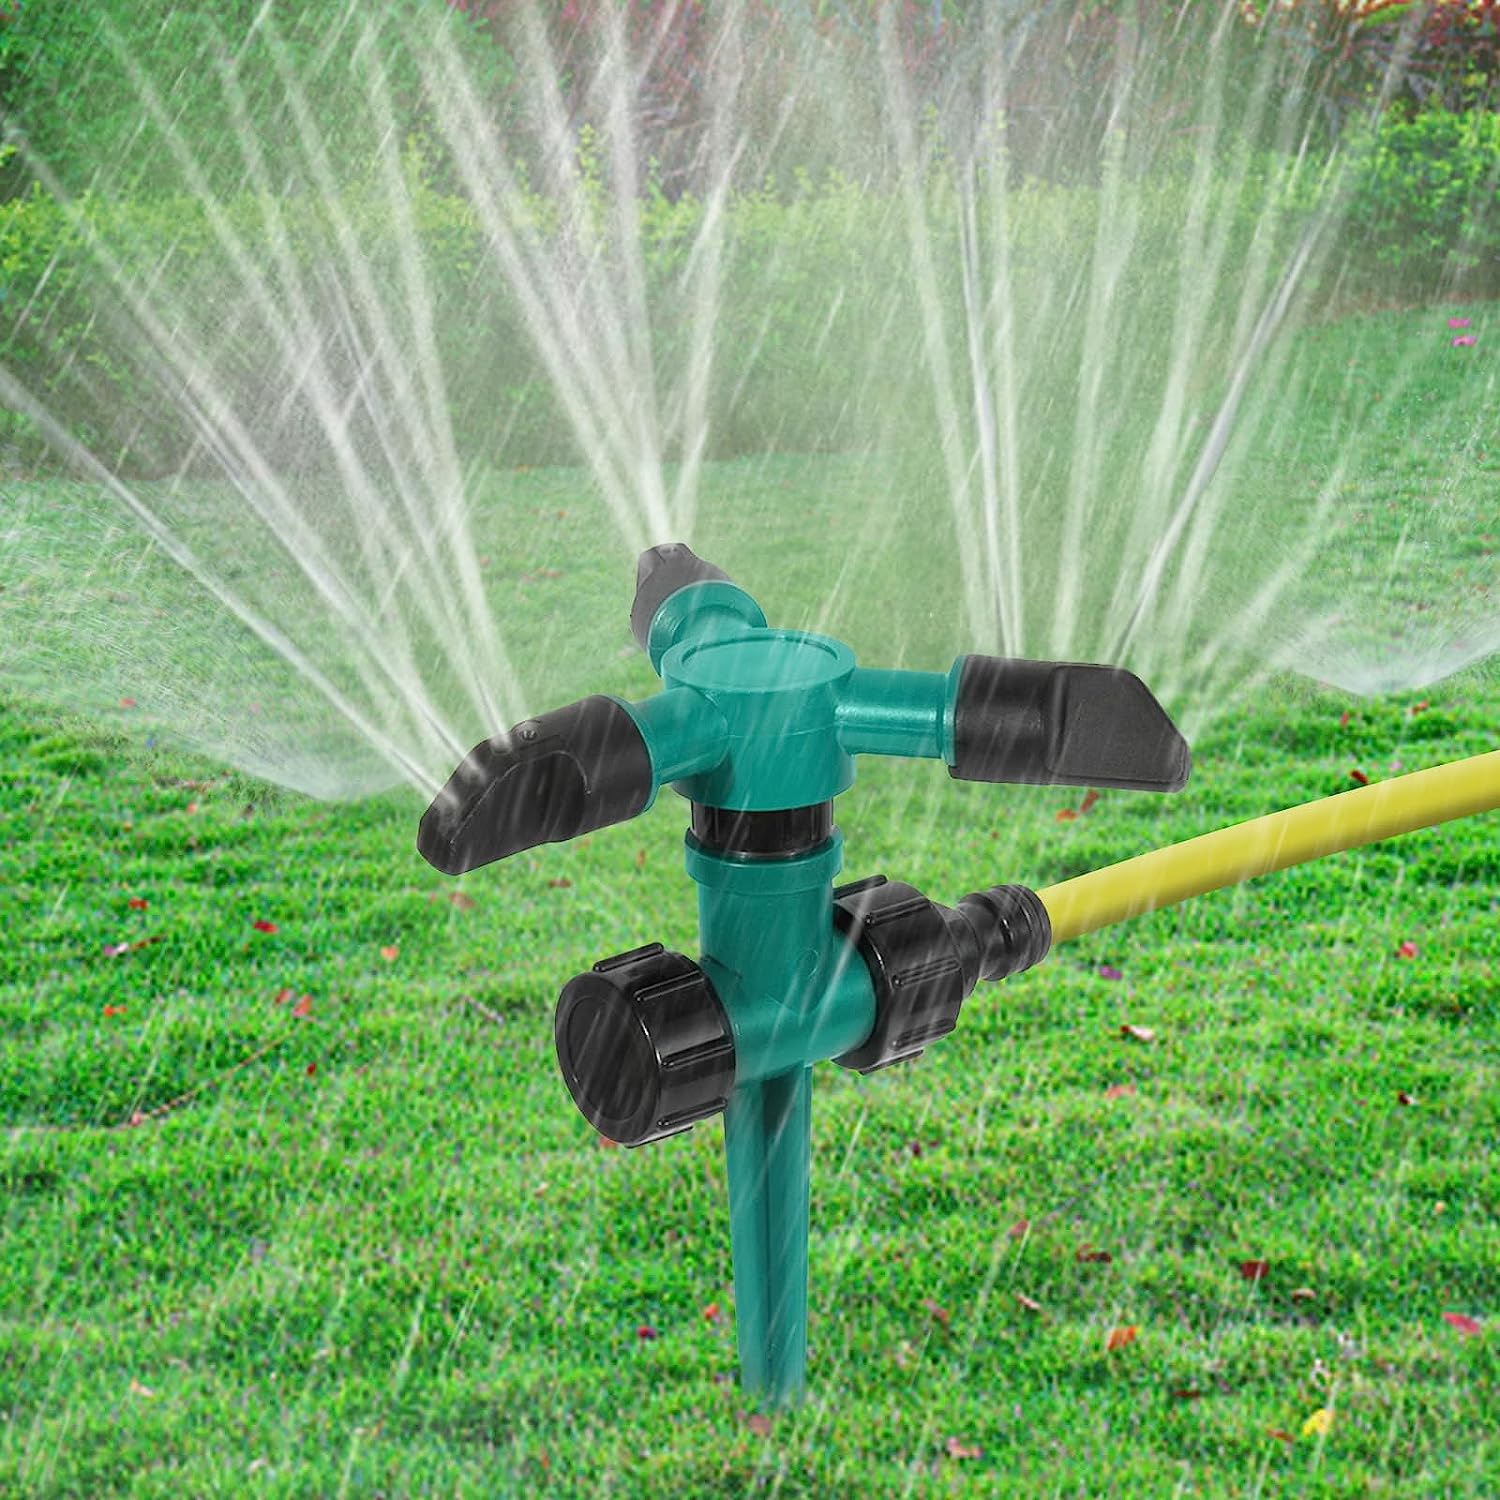 Sprinkler Yard - Garden Sprinklers for Lawn 360 Degree [...]